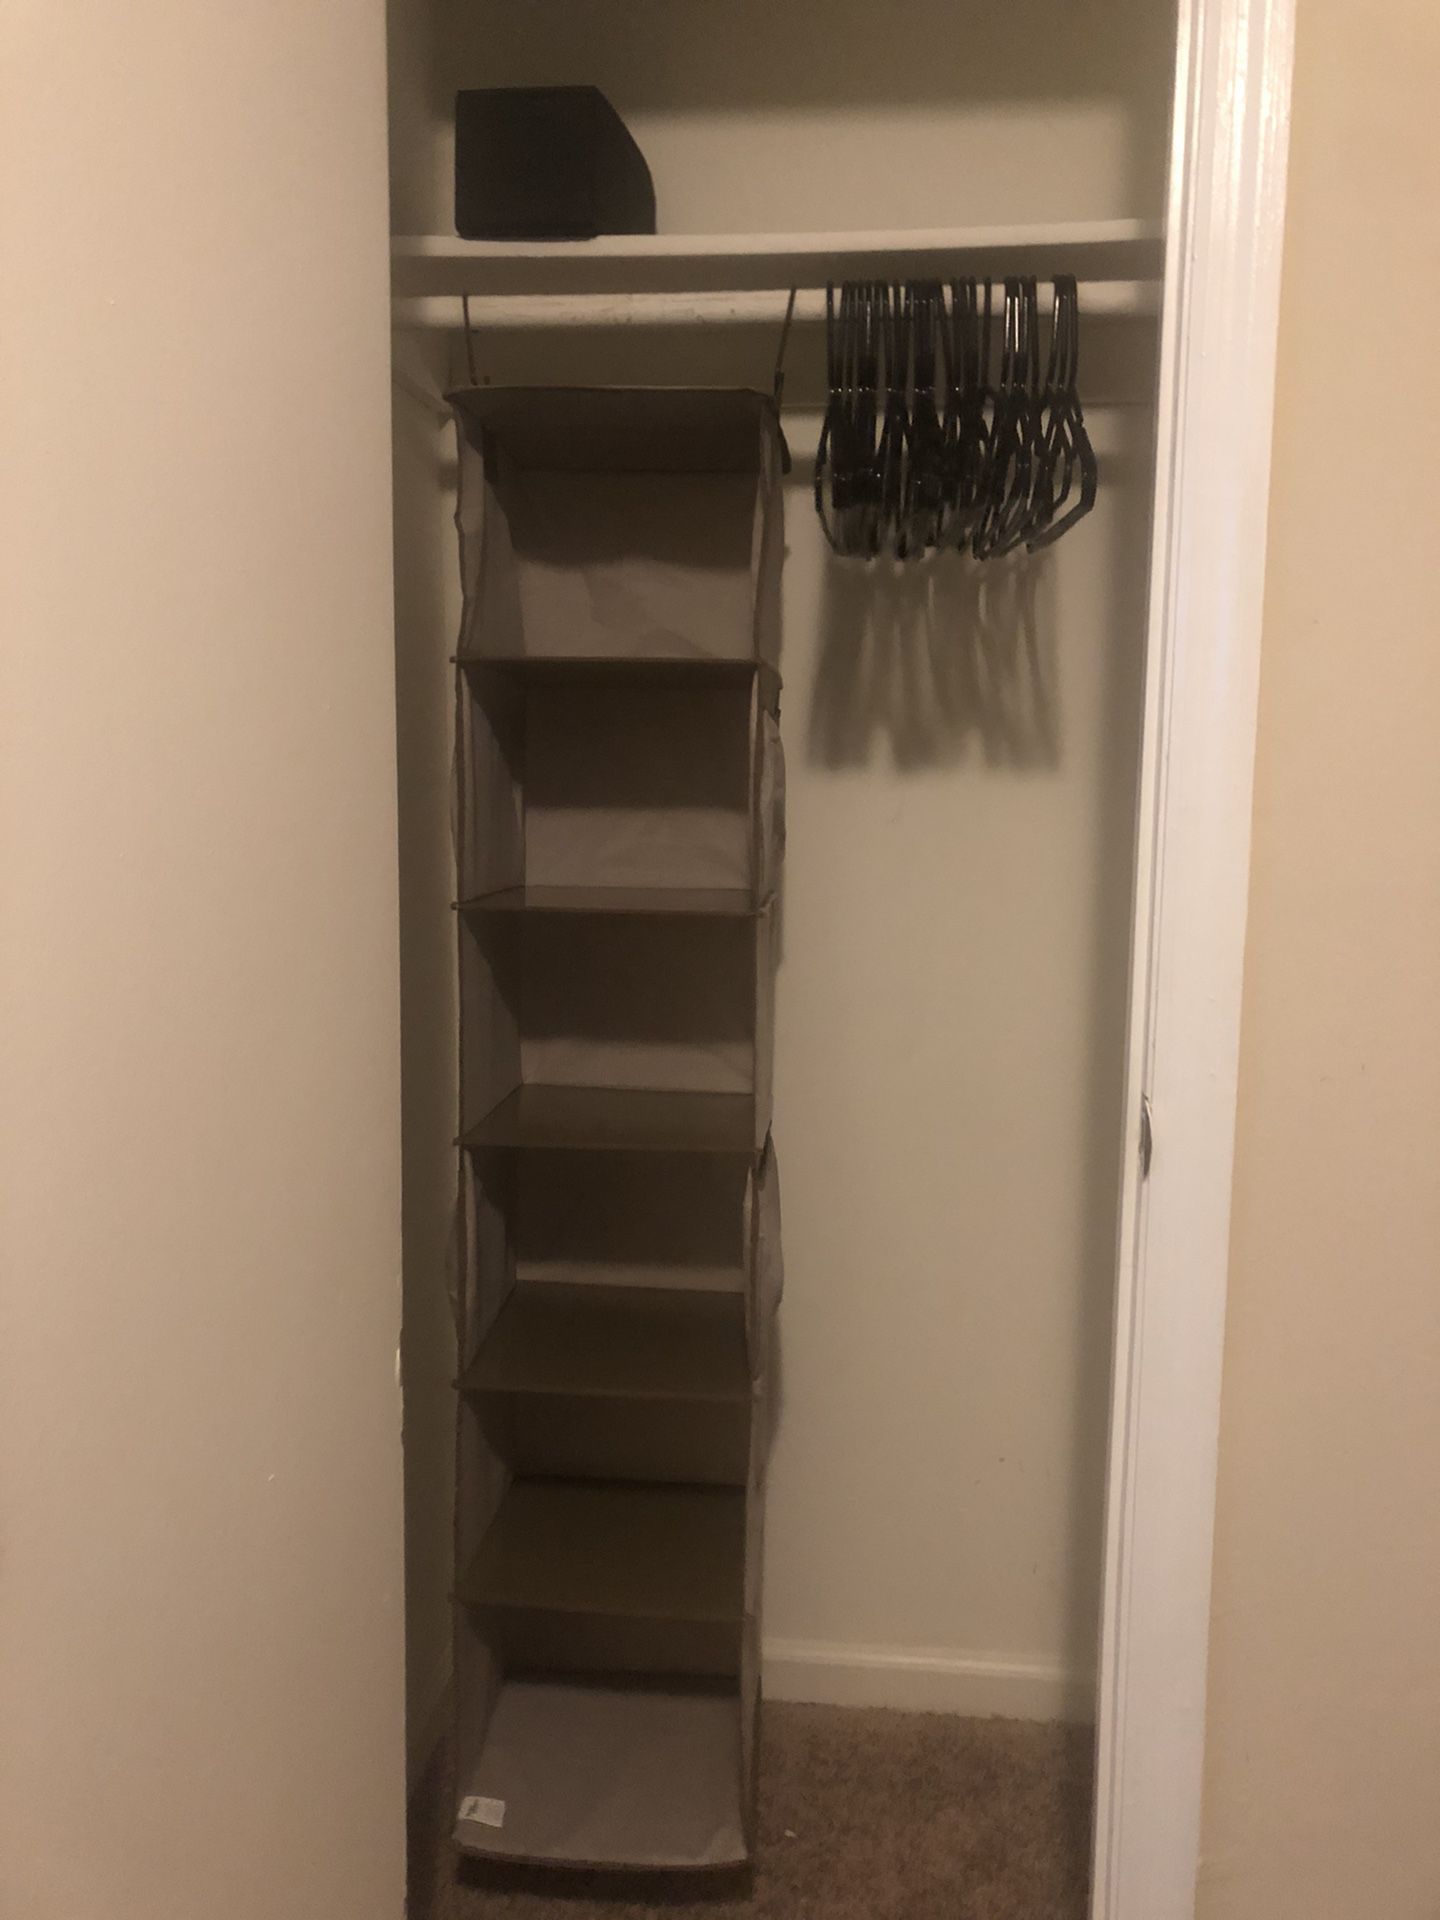 Closet organizer and hangers